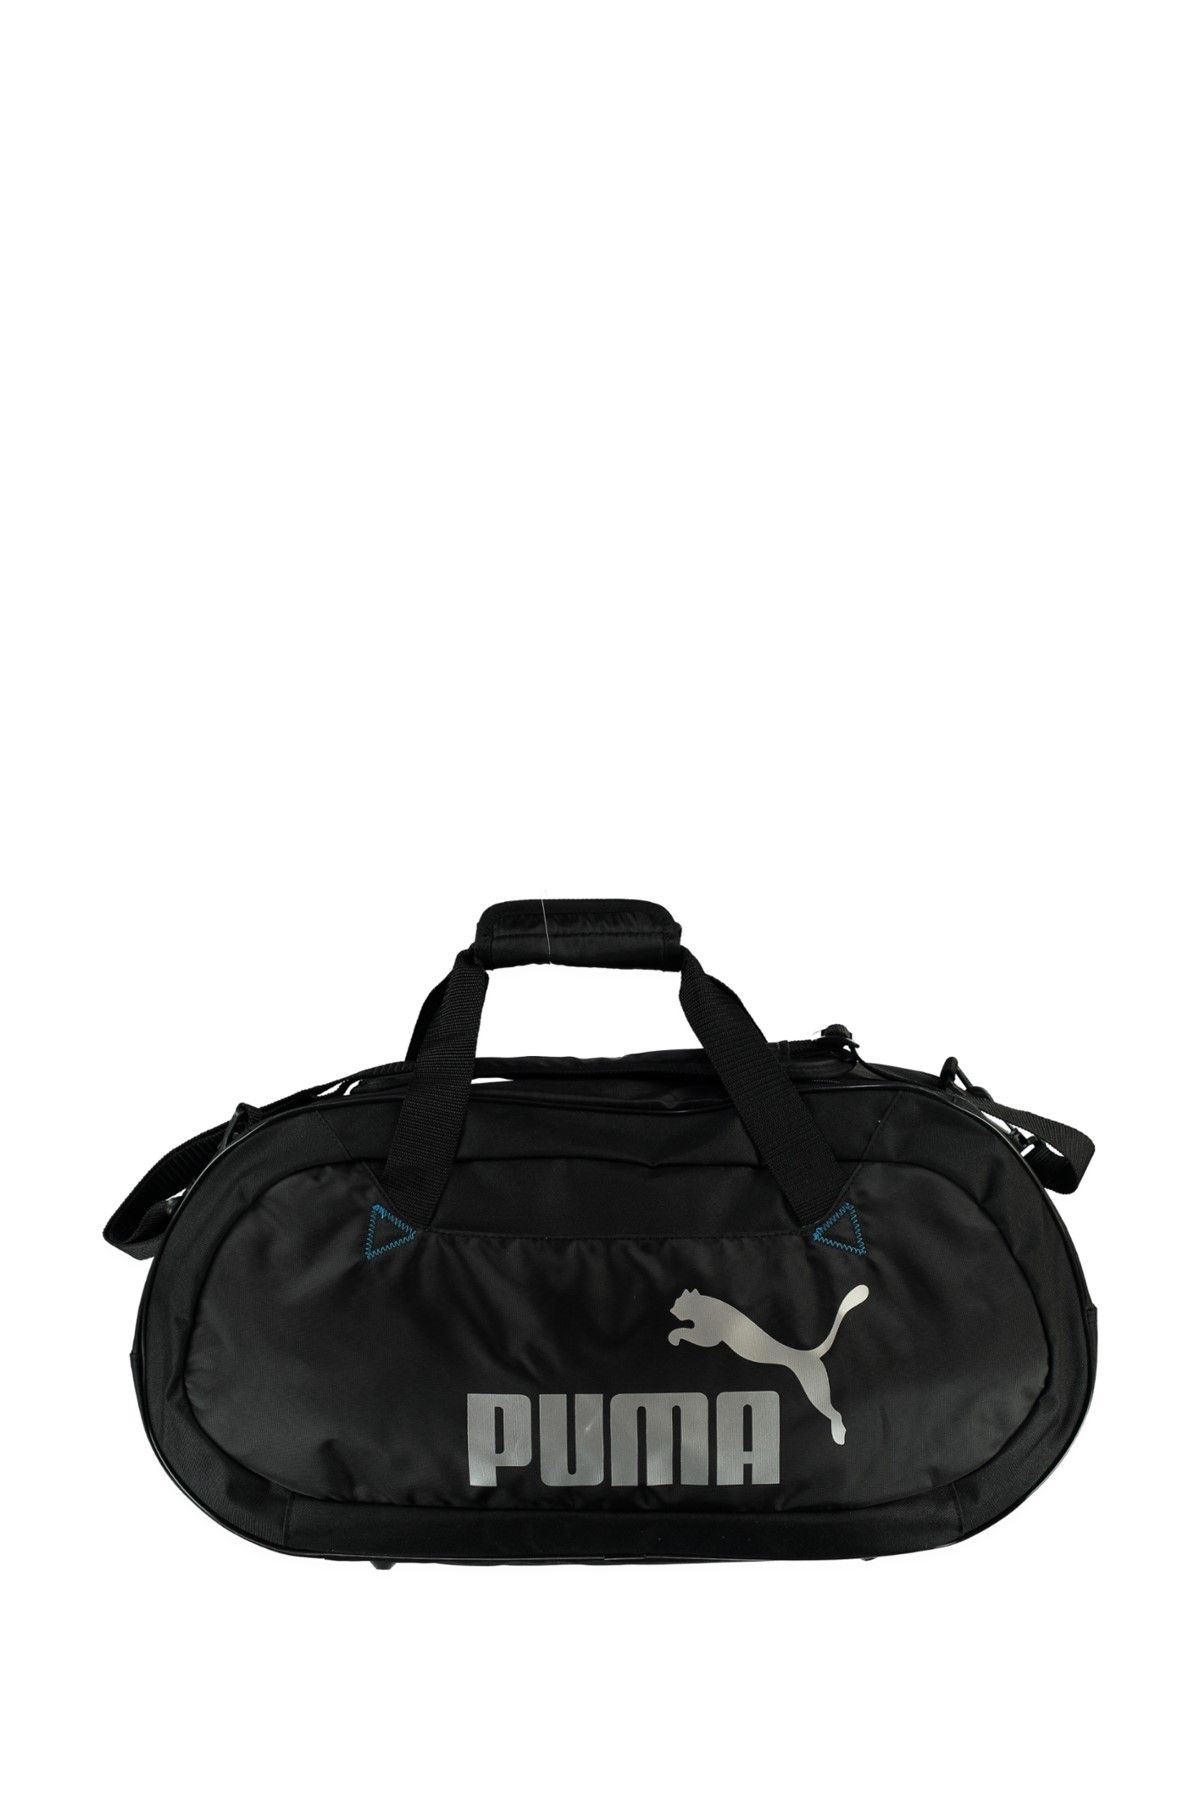 Puma Unisex Siyah   Çanta - Active TR Duffle Bag S  Black- S